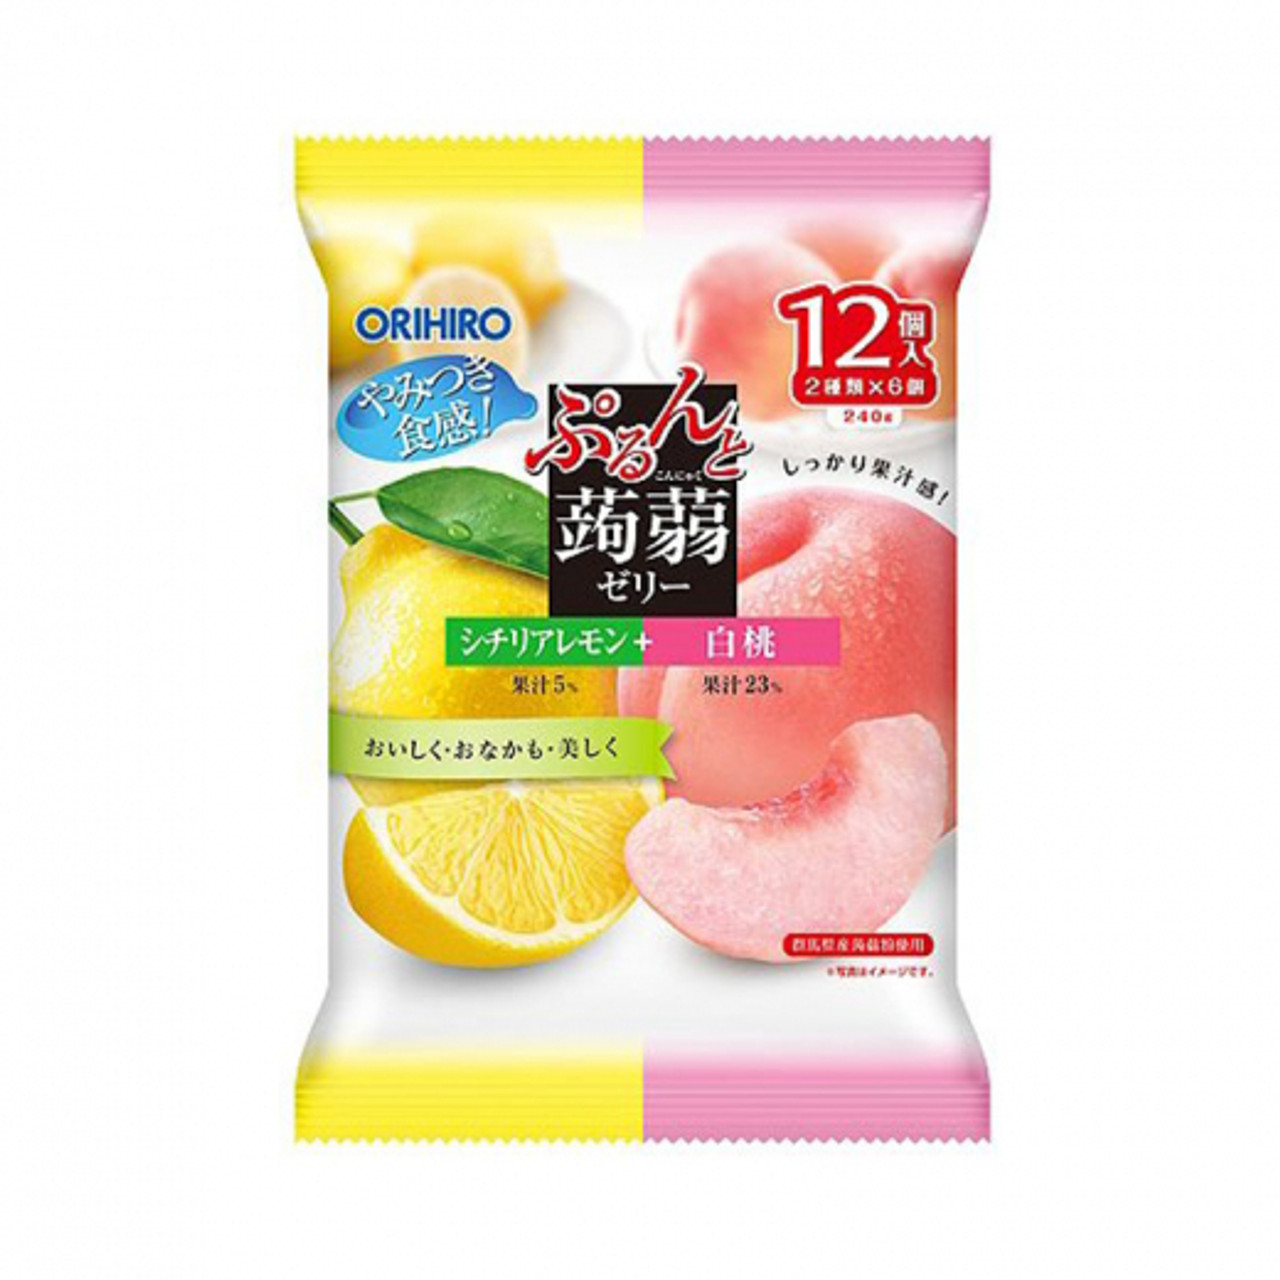 Orihiro Konnyaku Jelly Lemon & White Peach 12pcs/欧立喜乐ORIHIRO 蒟蒻果冻 柠檬&白桃味 12个